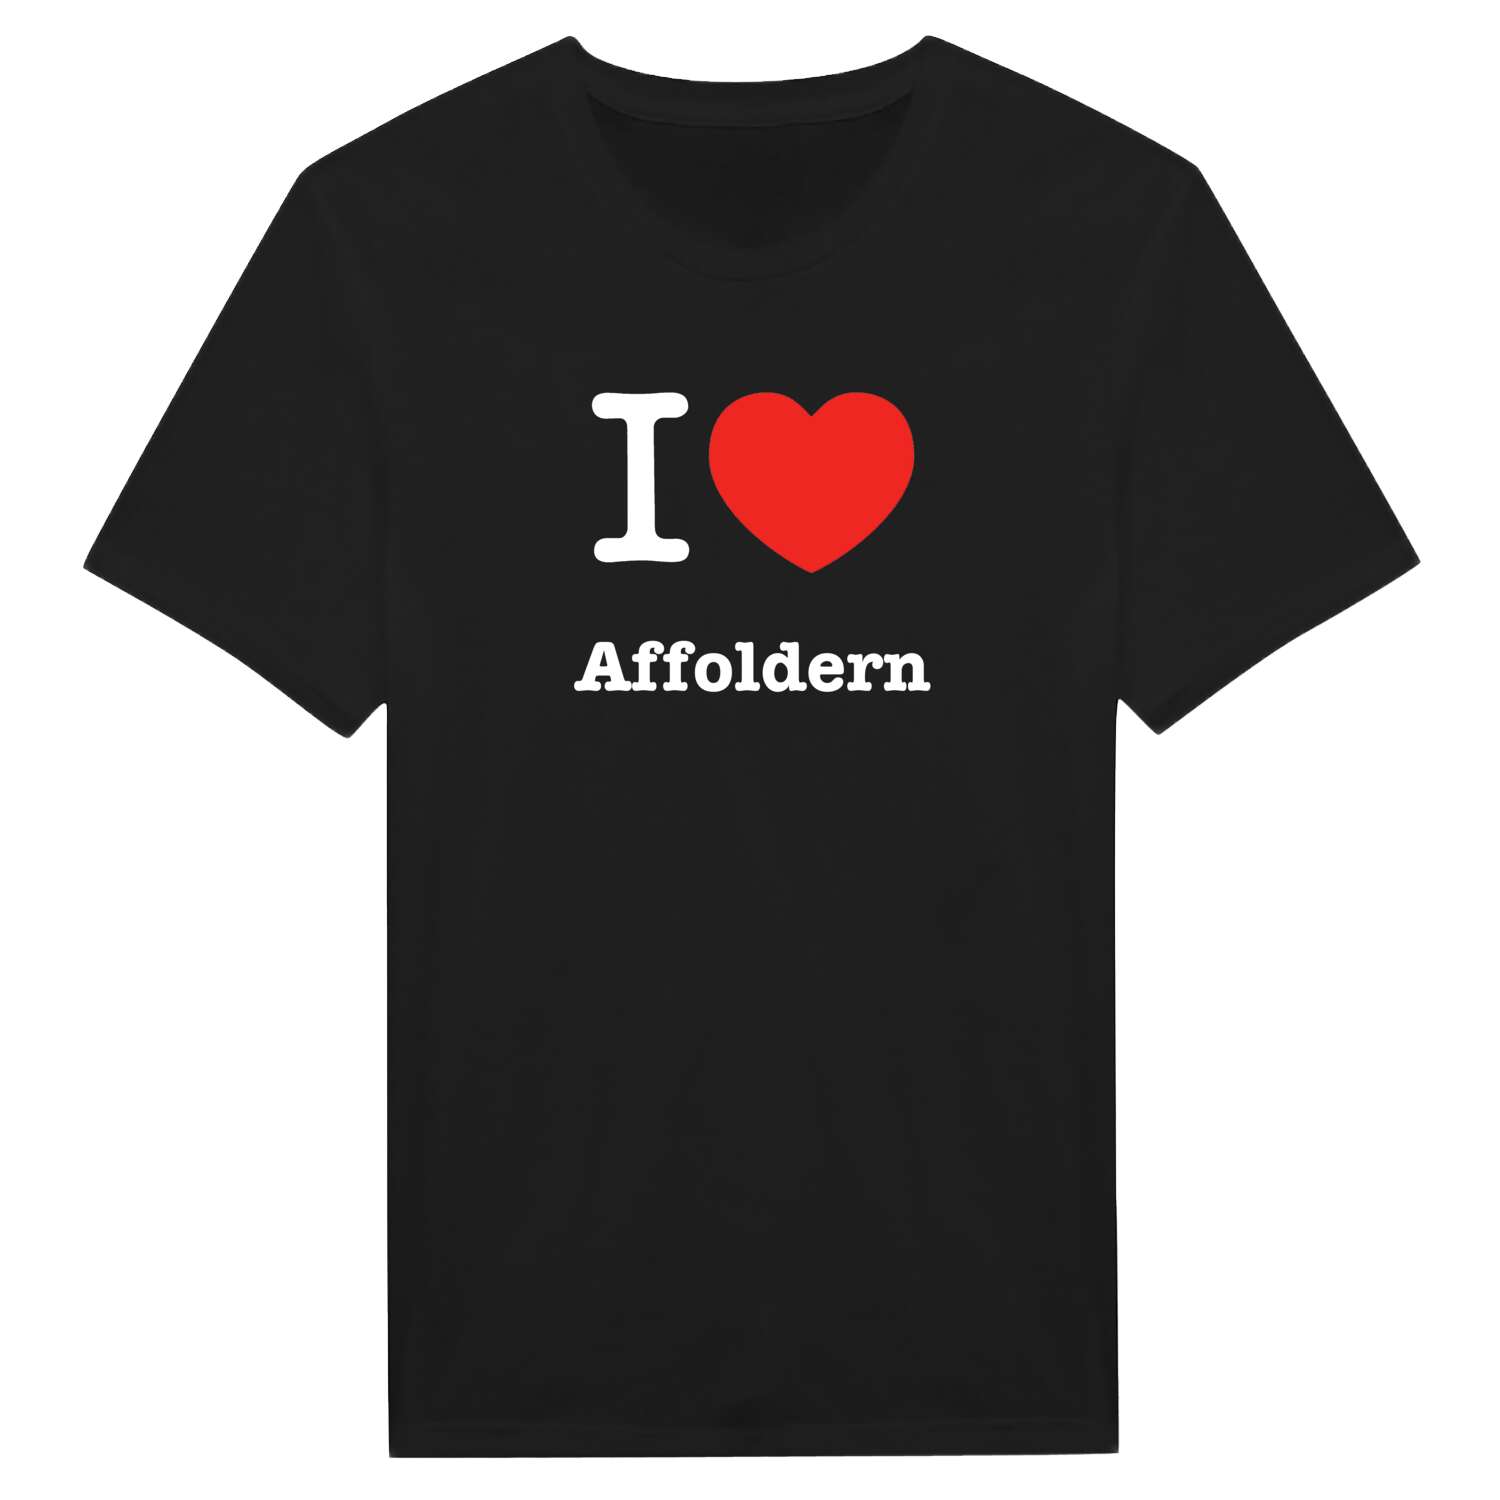 Affoldern T-Shirt »I love«